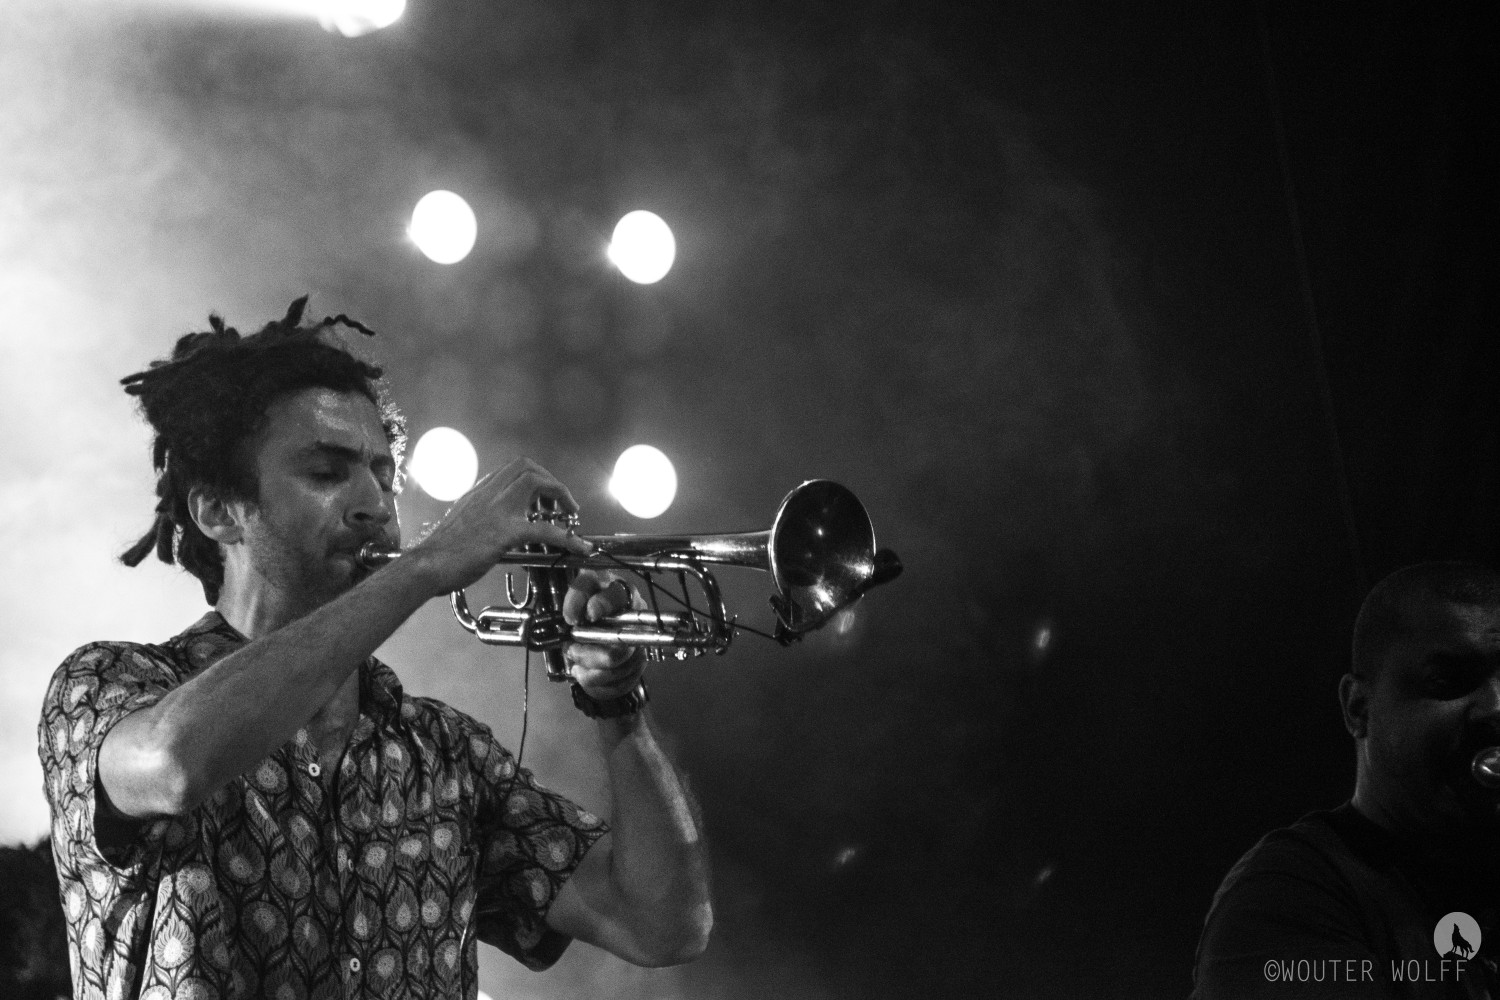 Bixiga 70 live at Festival International de Jazz de Montréal. July 3, 2017.